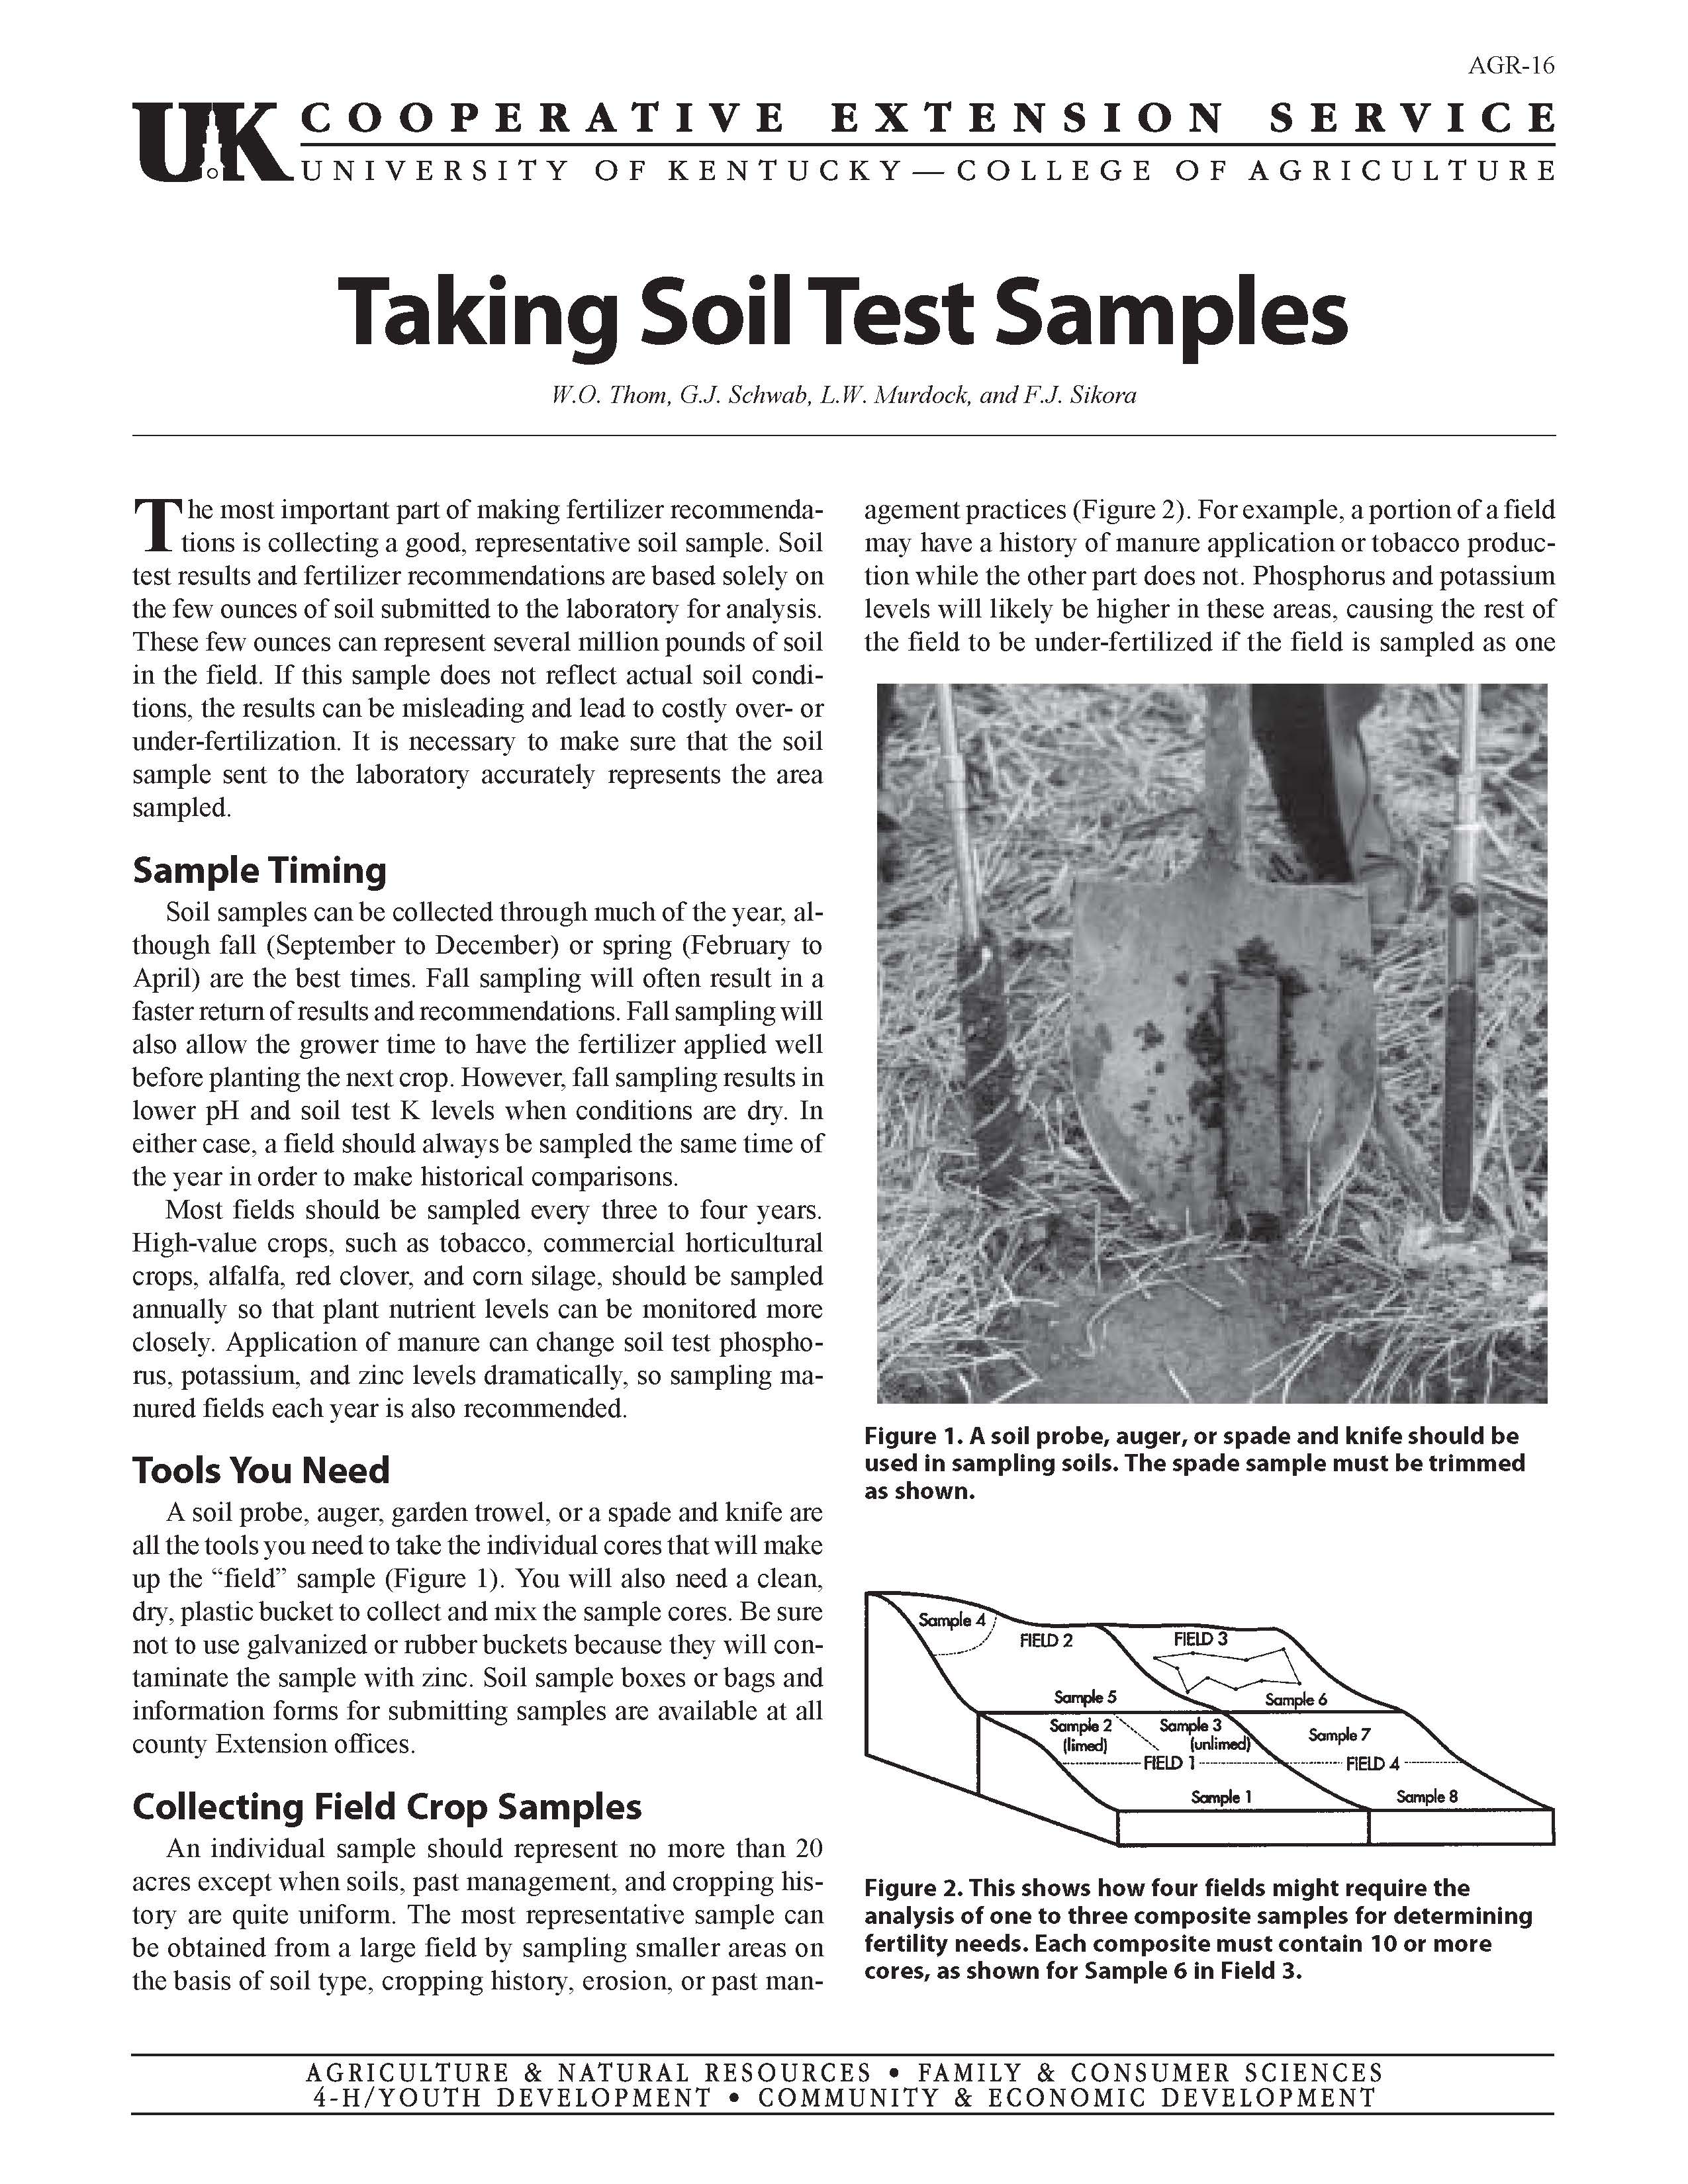 Soil Sample AGR-16 page 1